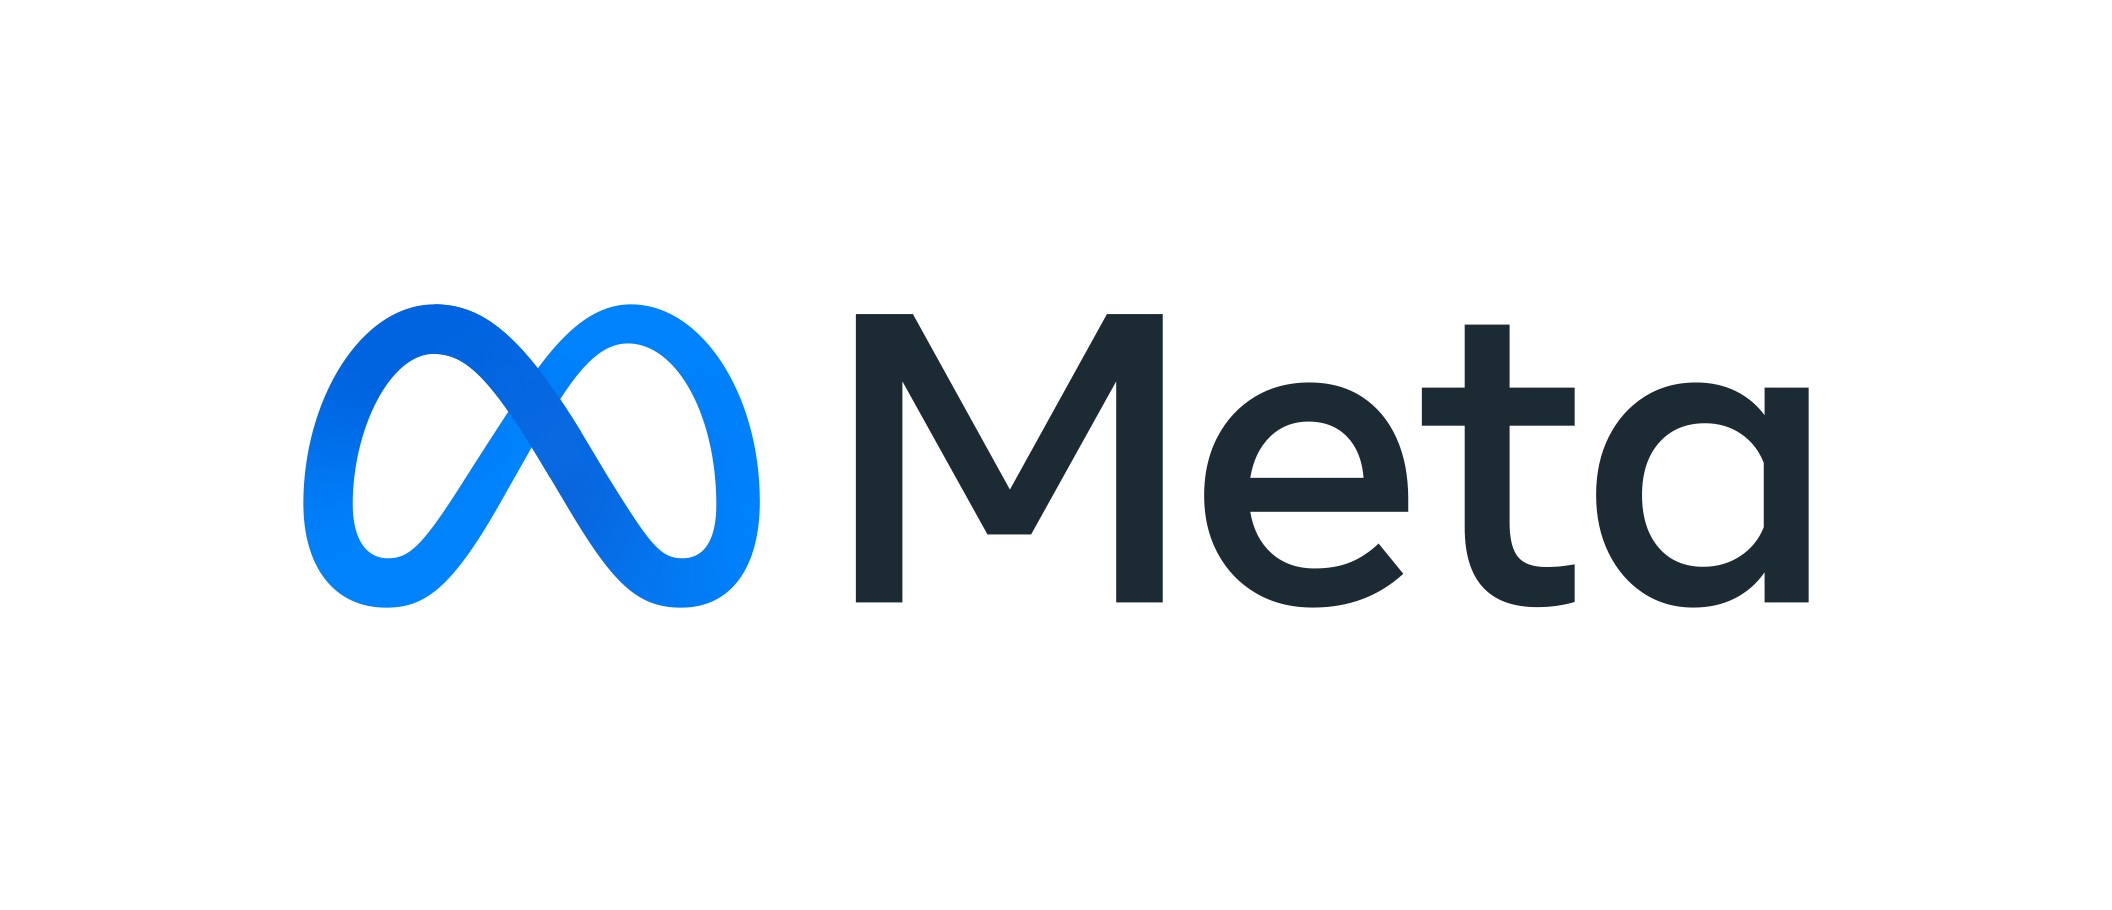 Meta Logo.jpg